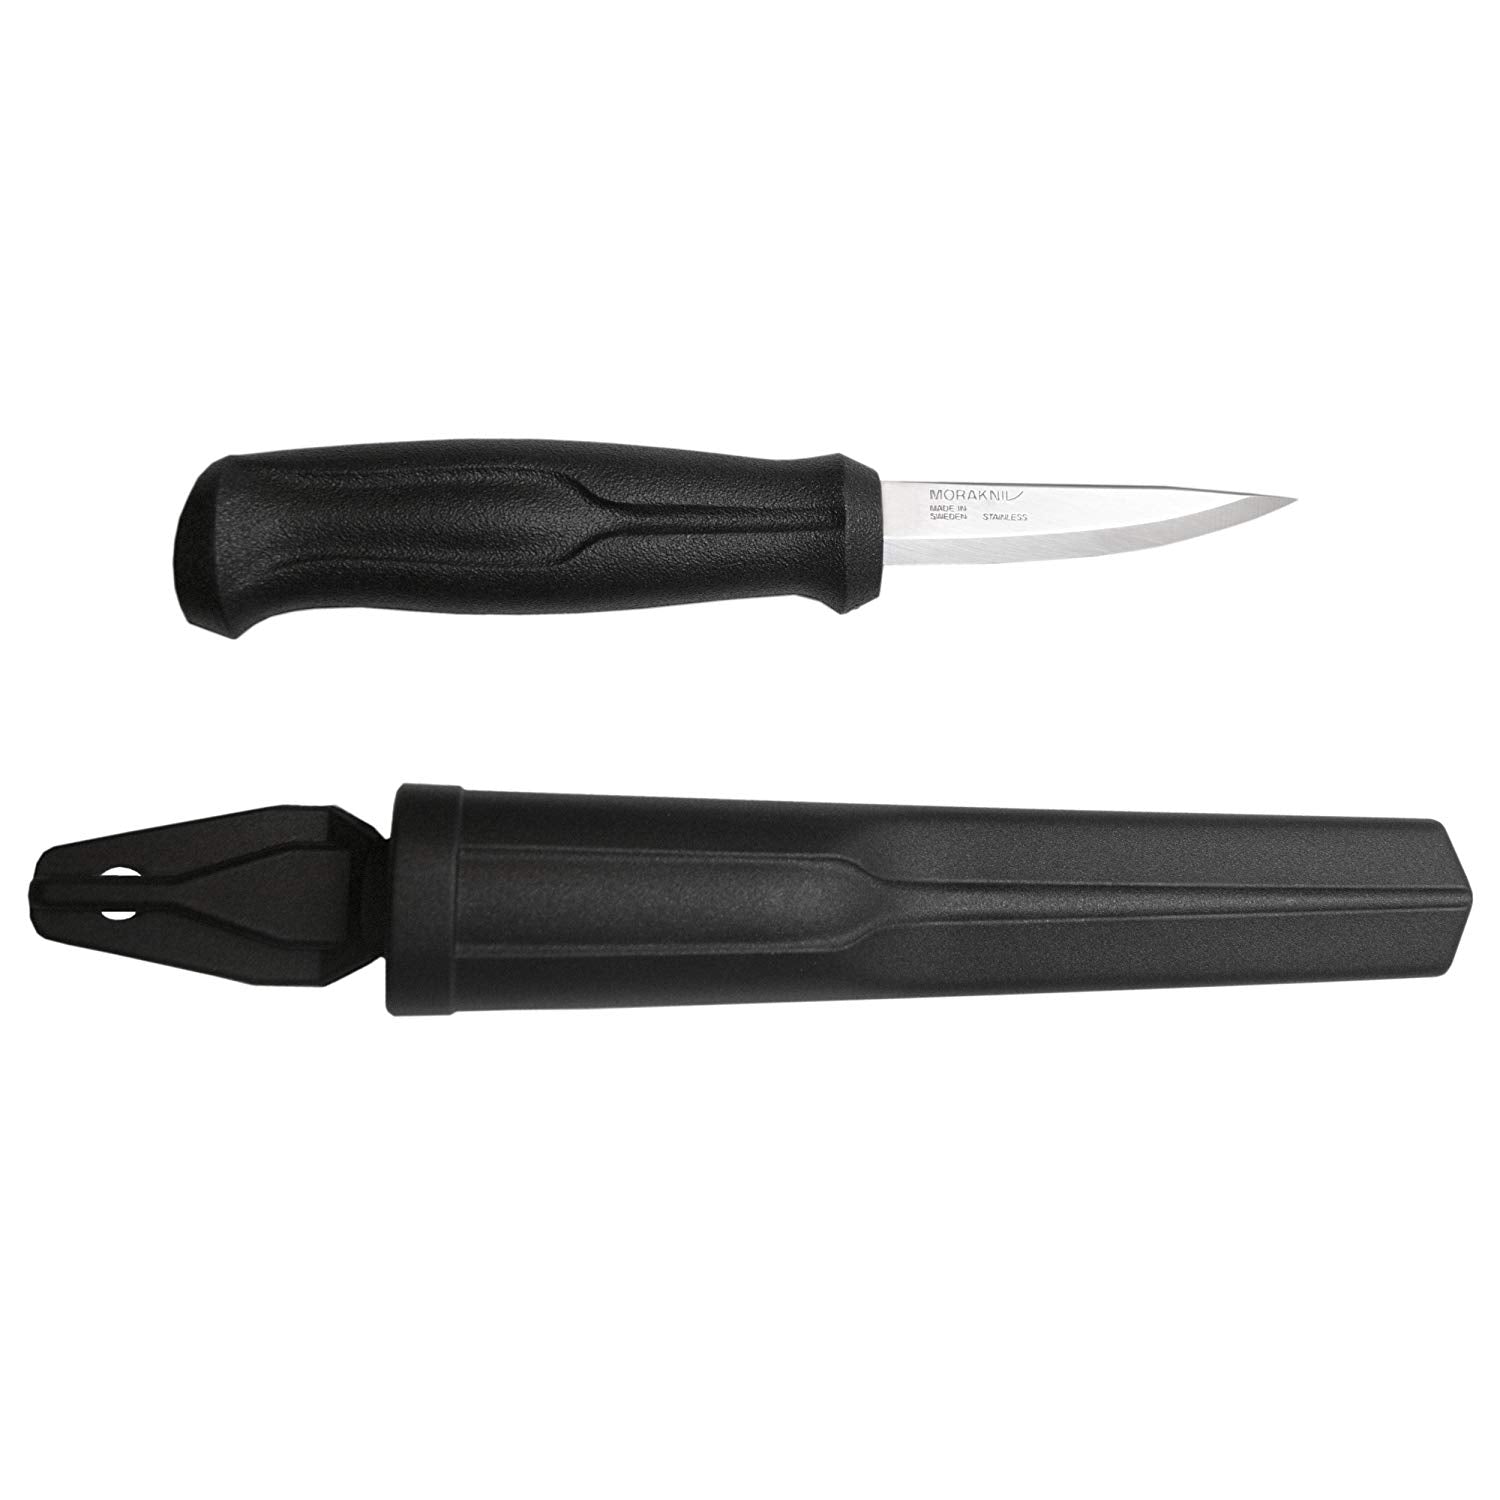 Mora M-12658 Wood Carving Basic Knife from Sweden